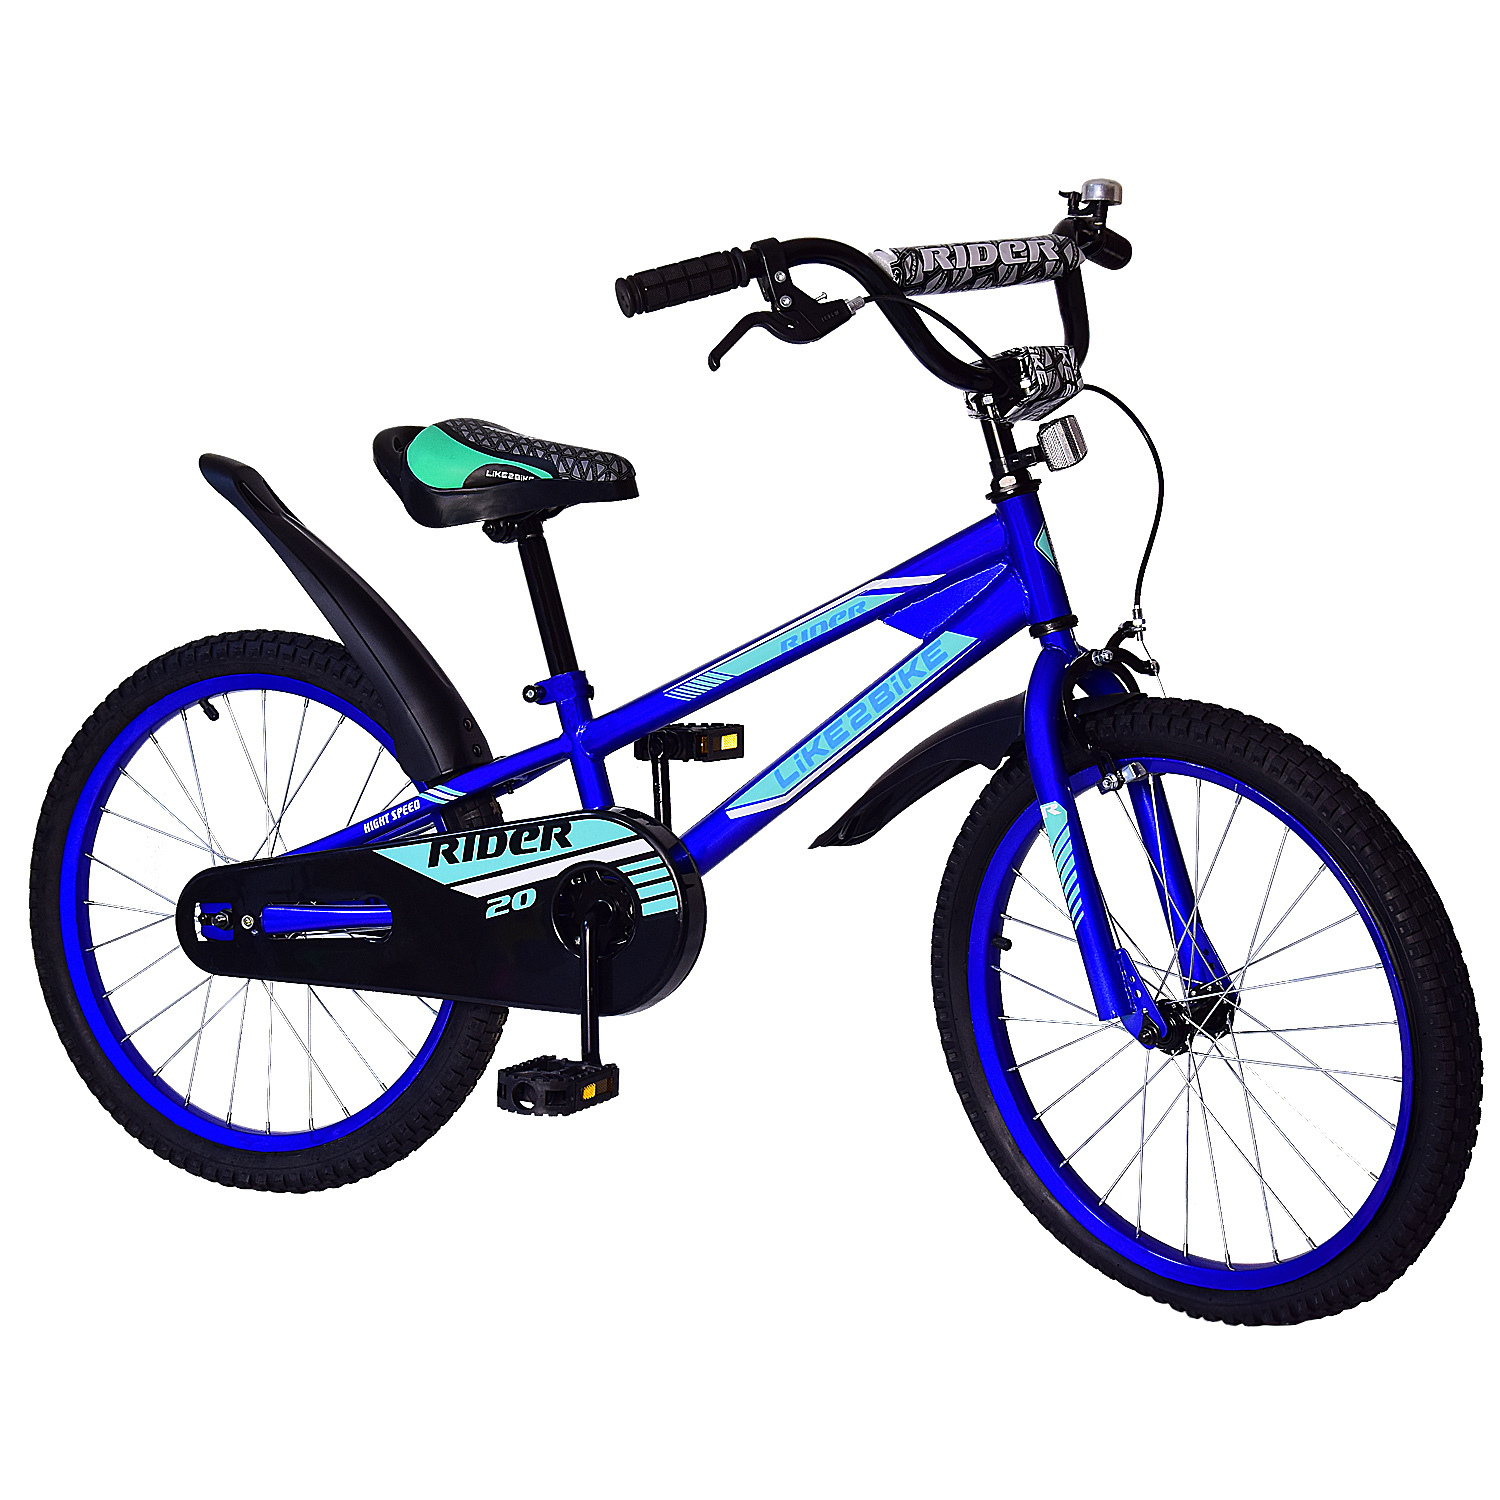 Like bike 5. Like Bike велосипед. Детский велосипед синий с рамой. Велосипед трек детский двухколесный синий. Синий Райдер горный.